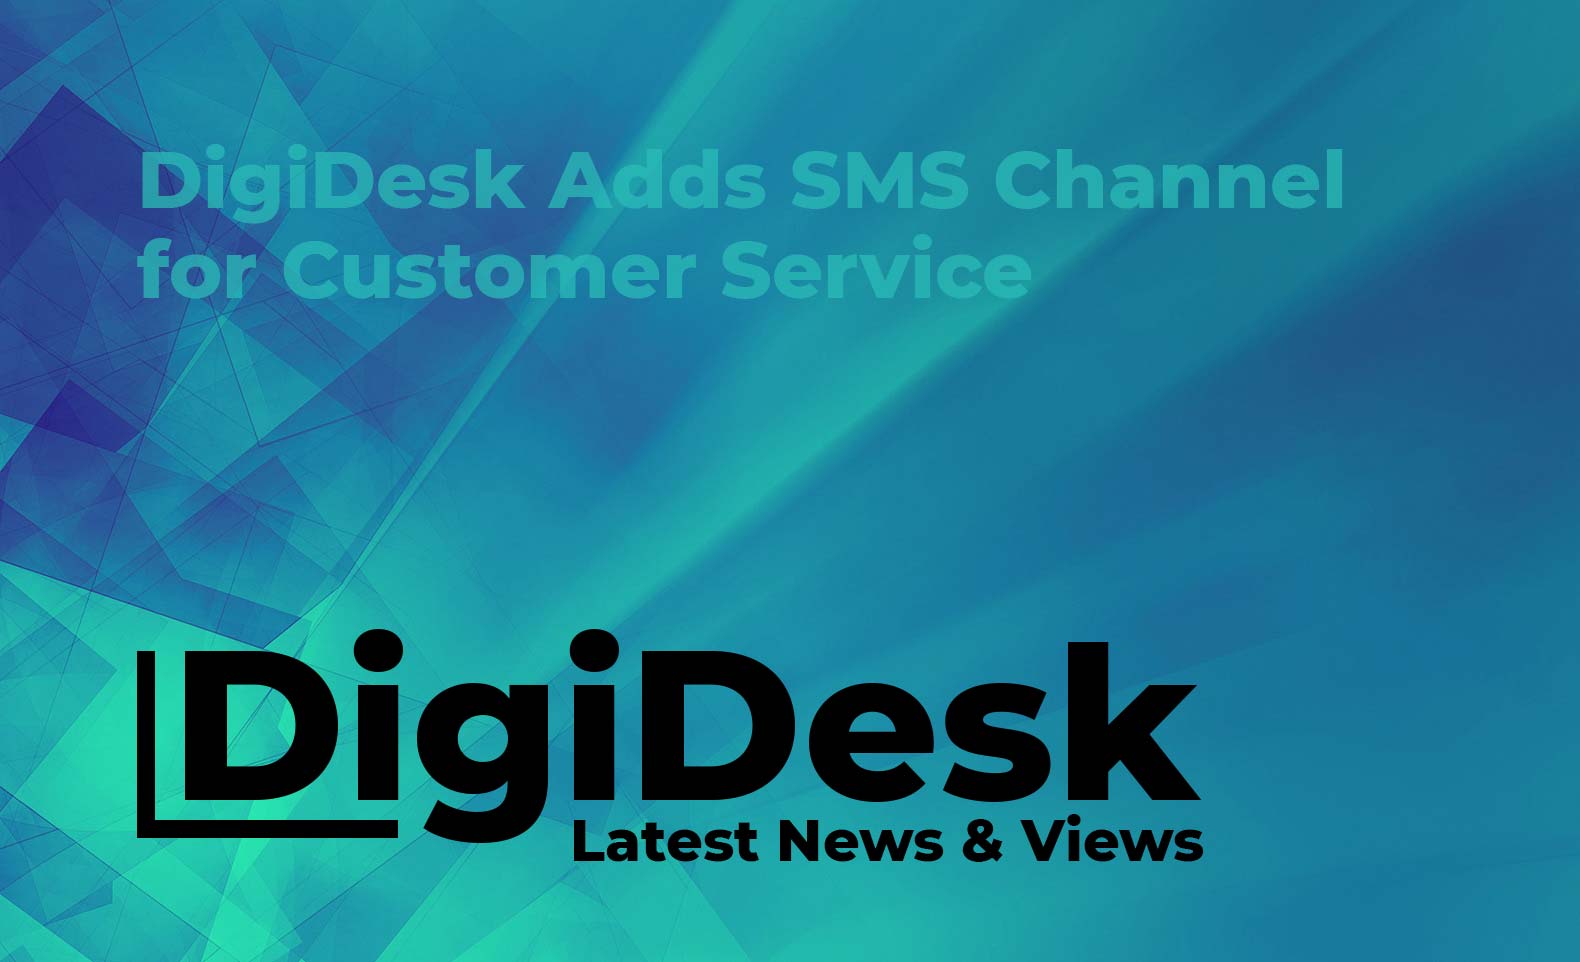 Blog banner - DigiDesk adds SMS channel for customer service